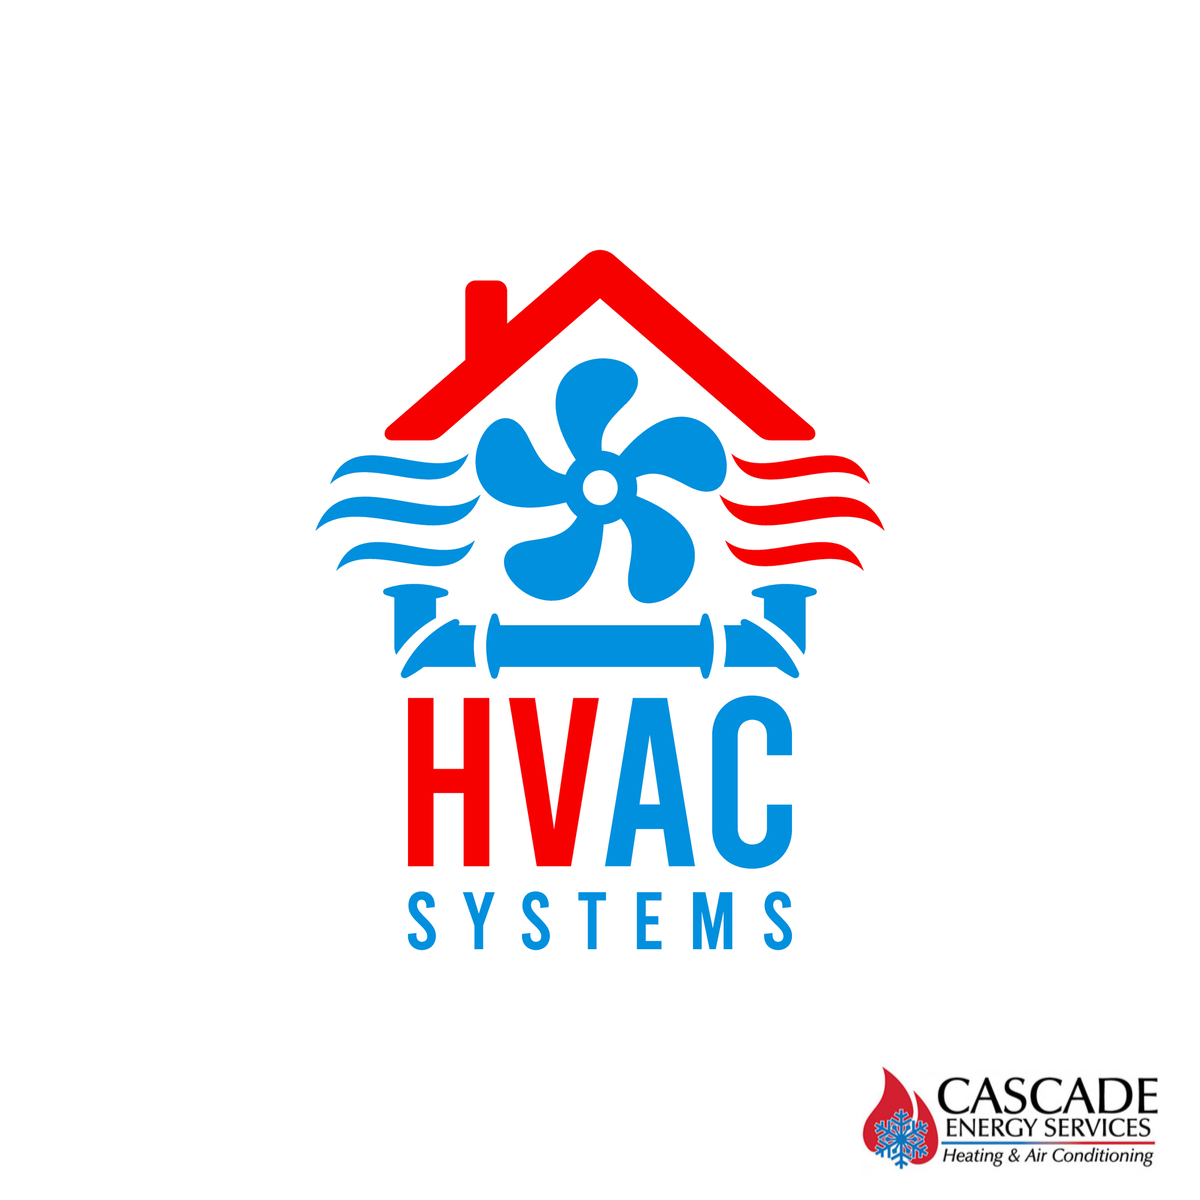 Why Is Regular HVAC Maintenance So Important?